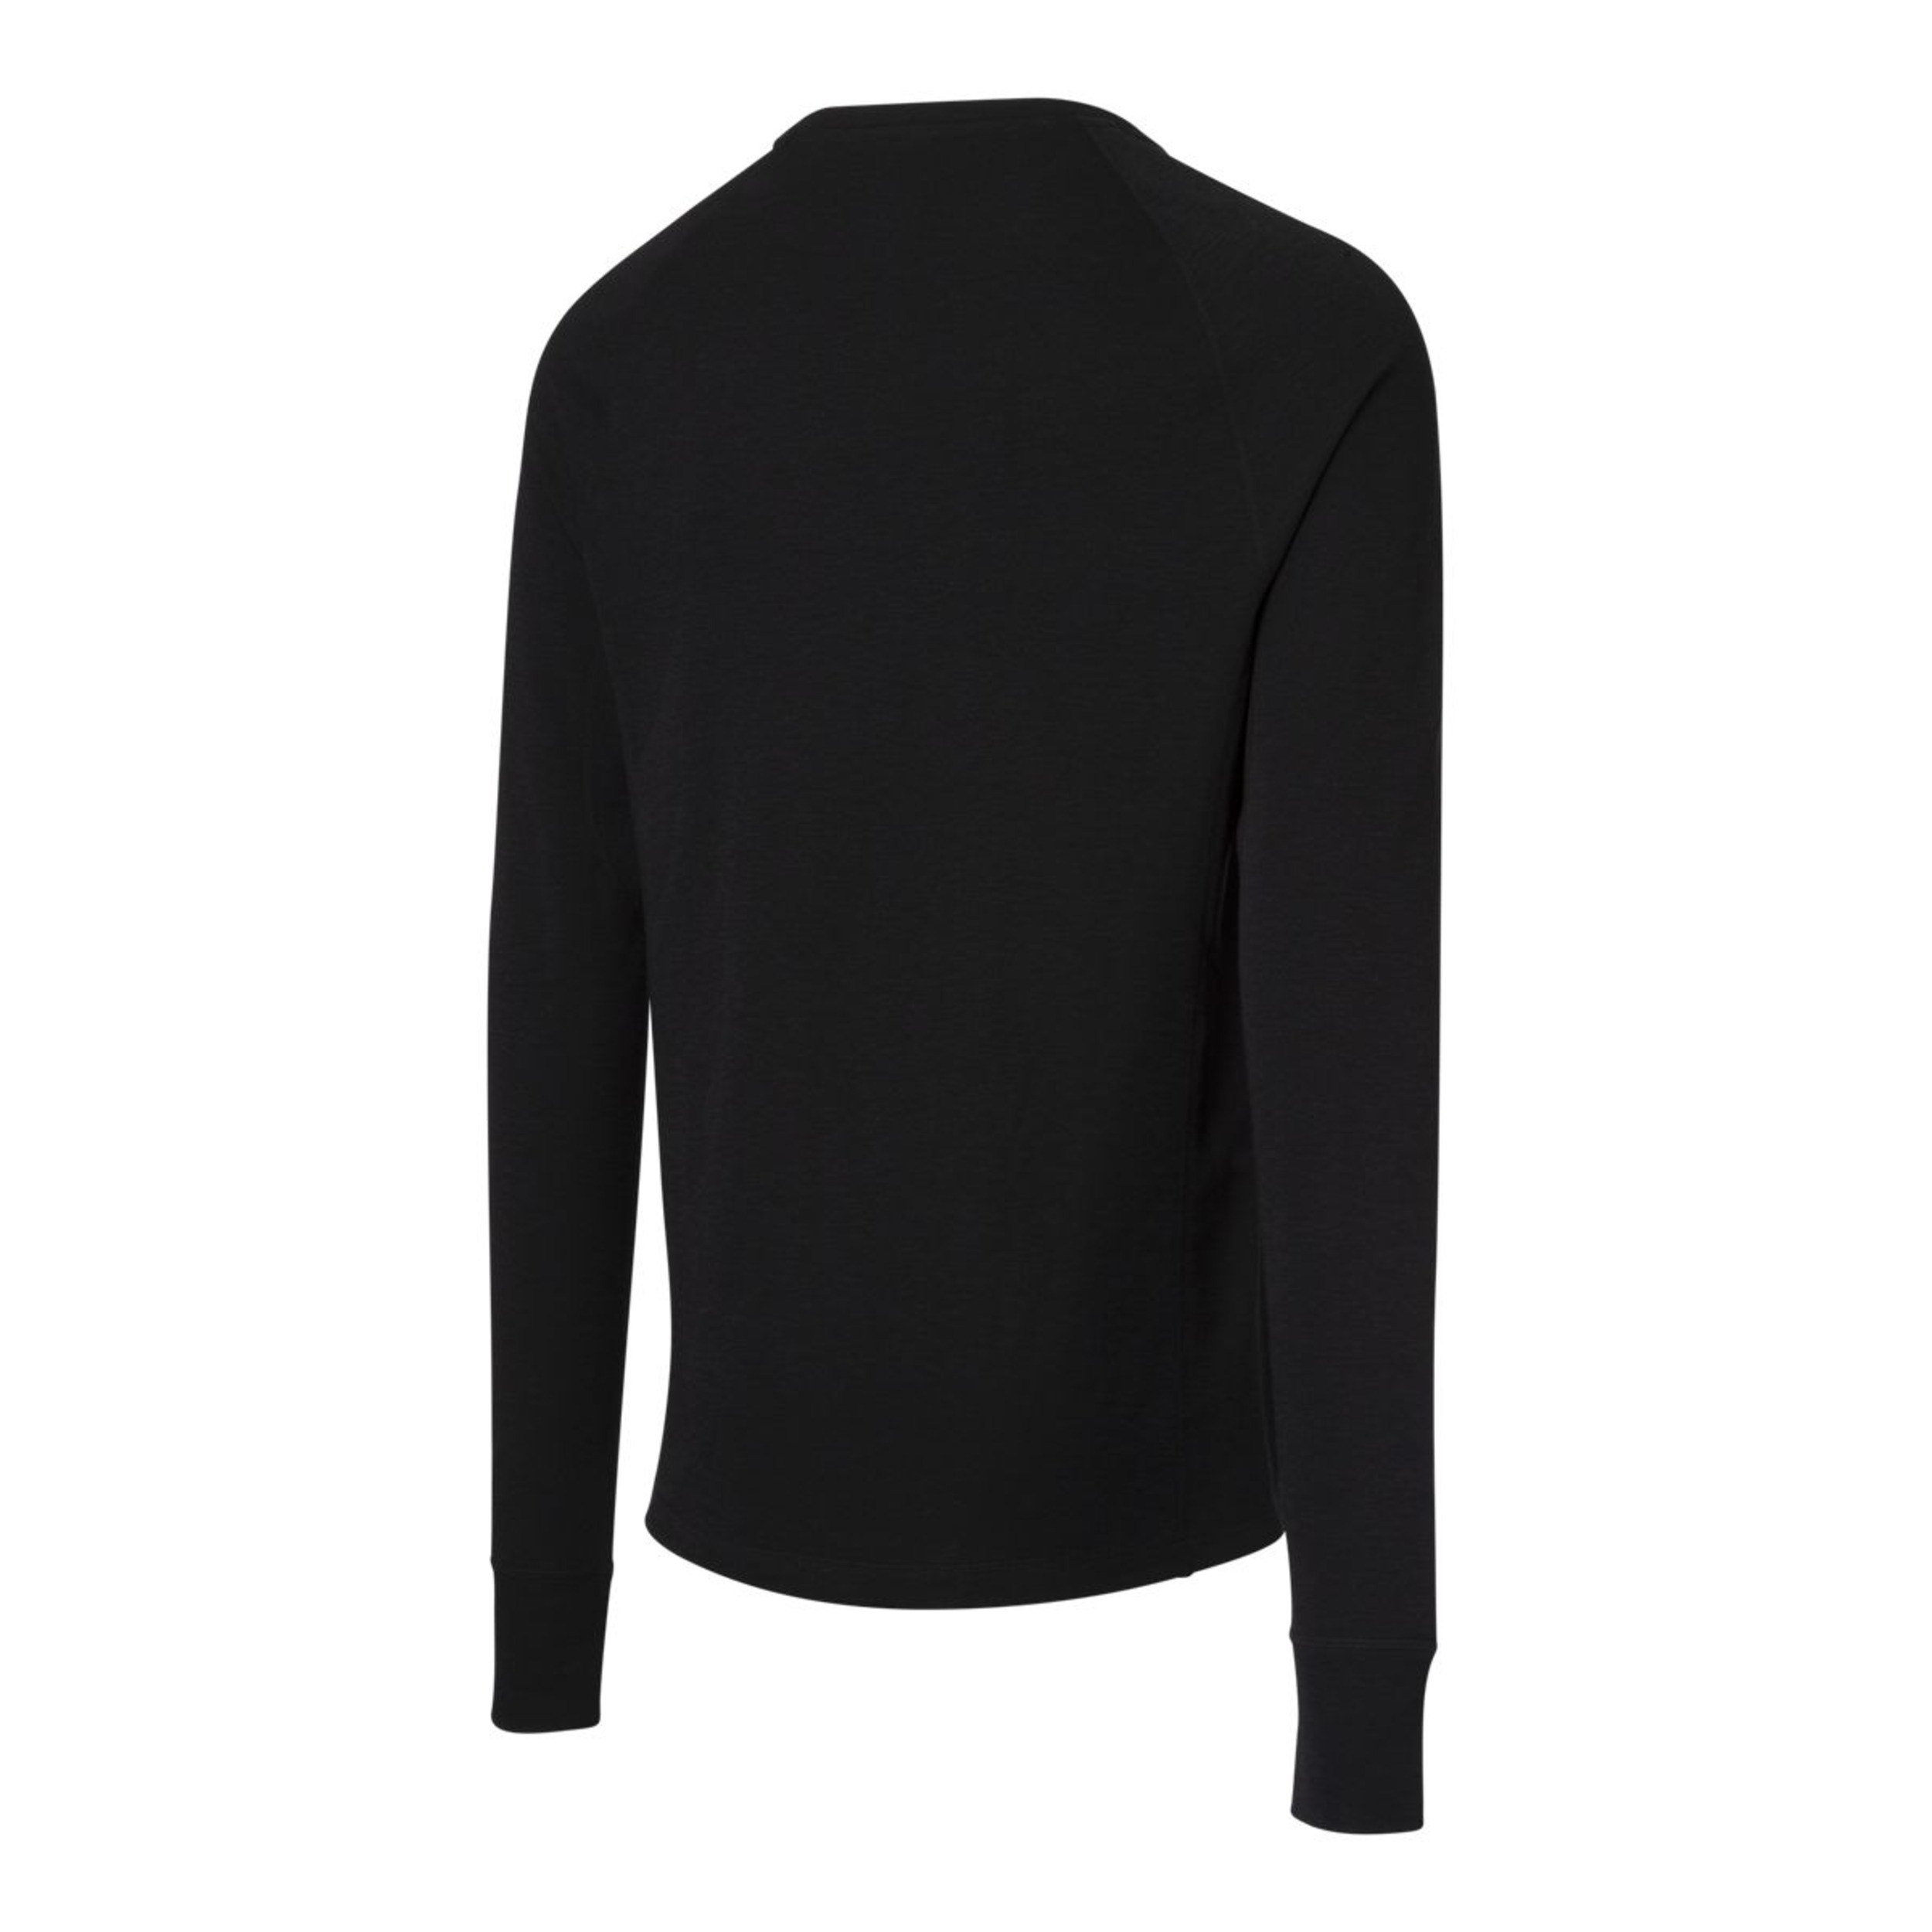 Ripzone Men's Merino Baselayer Long Sleeve Shirt | SportChek